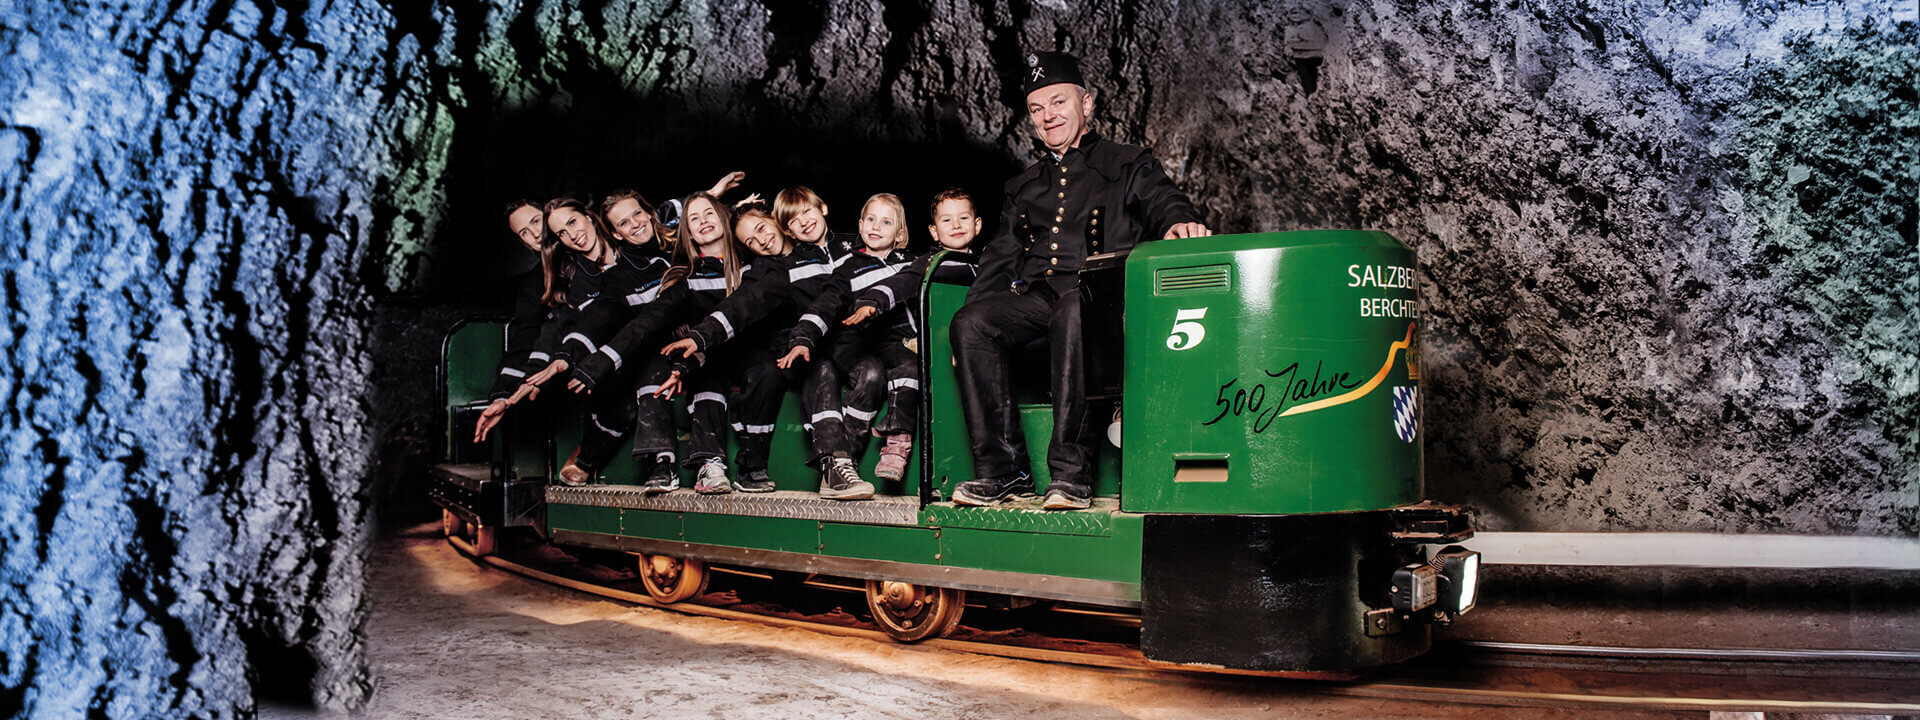 Students on the mine train in the Berchtesgaden salt mine